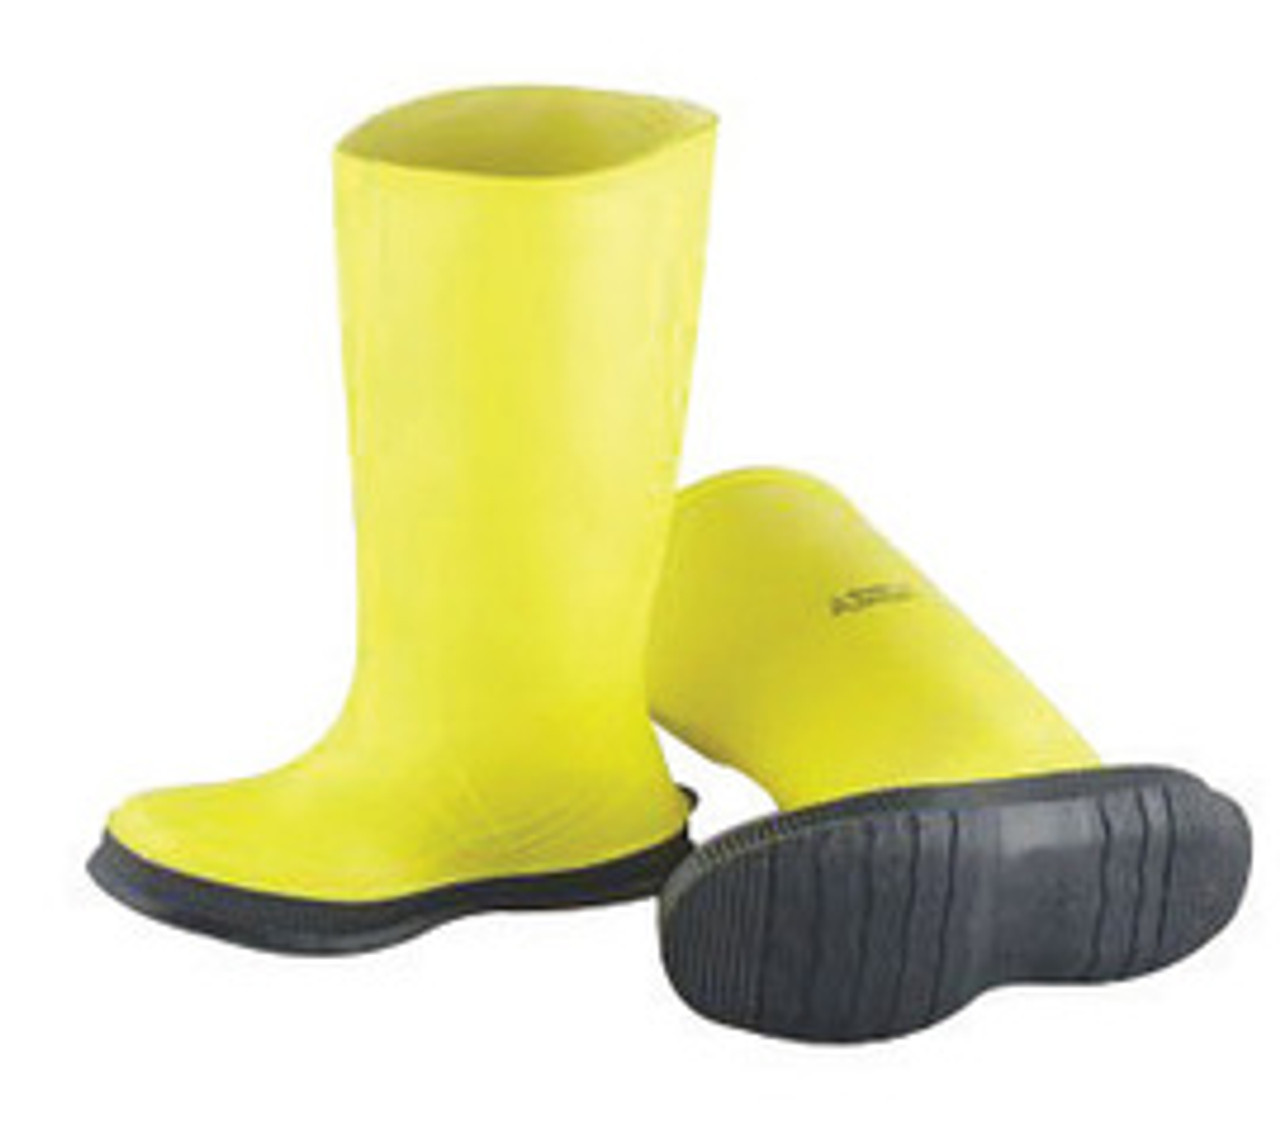 bata waterproof boots